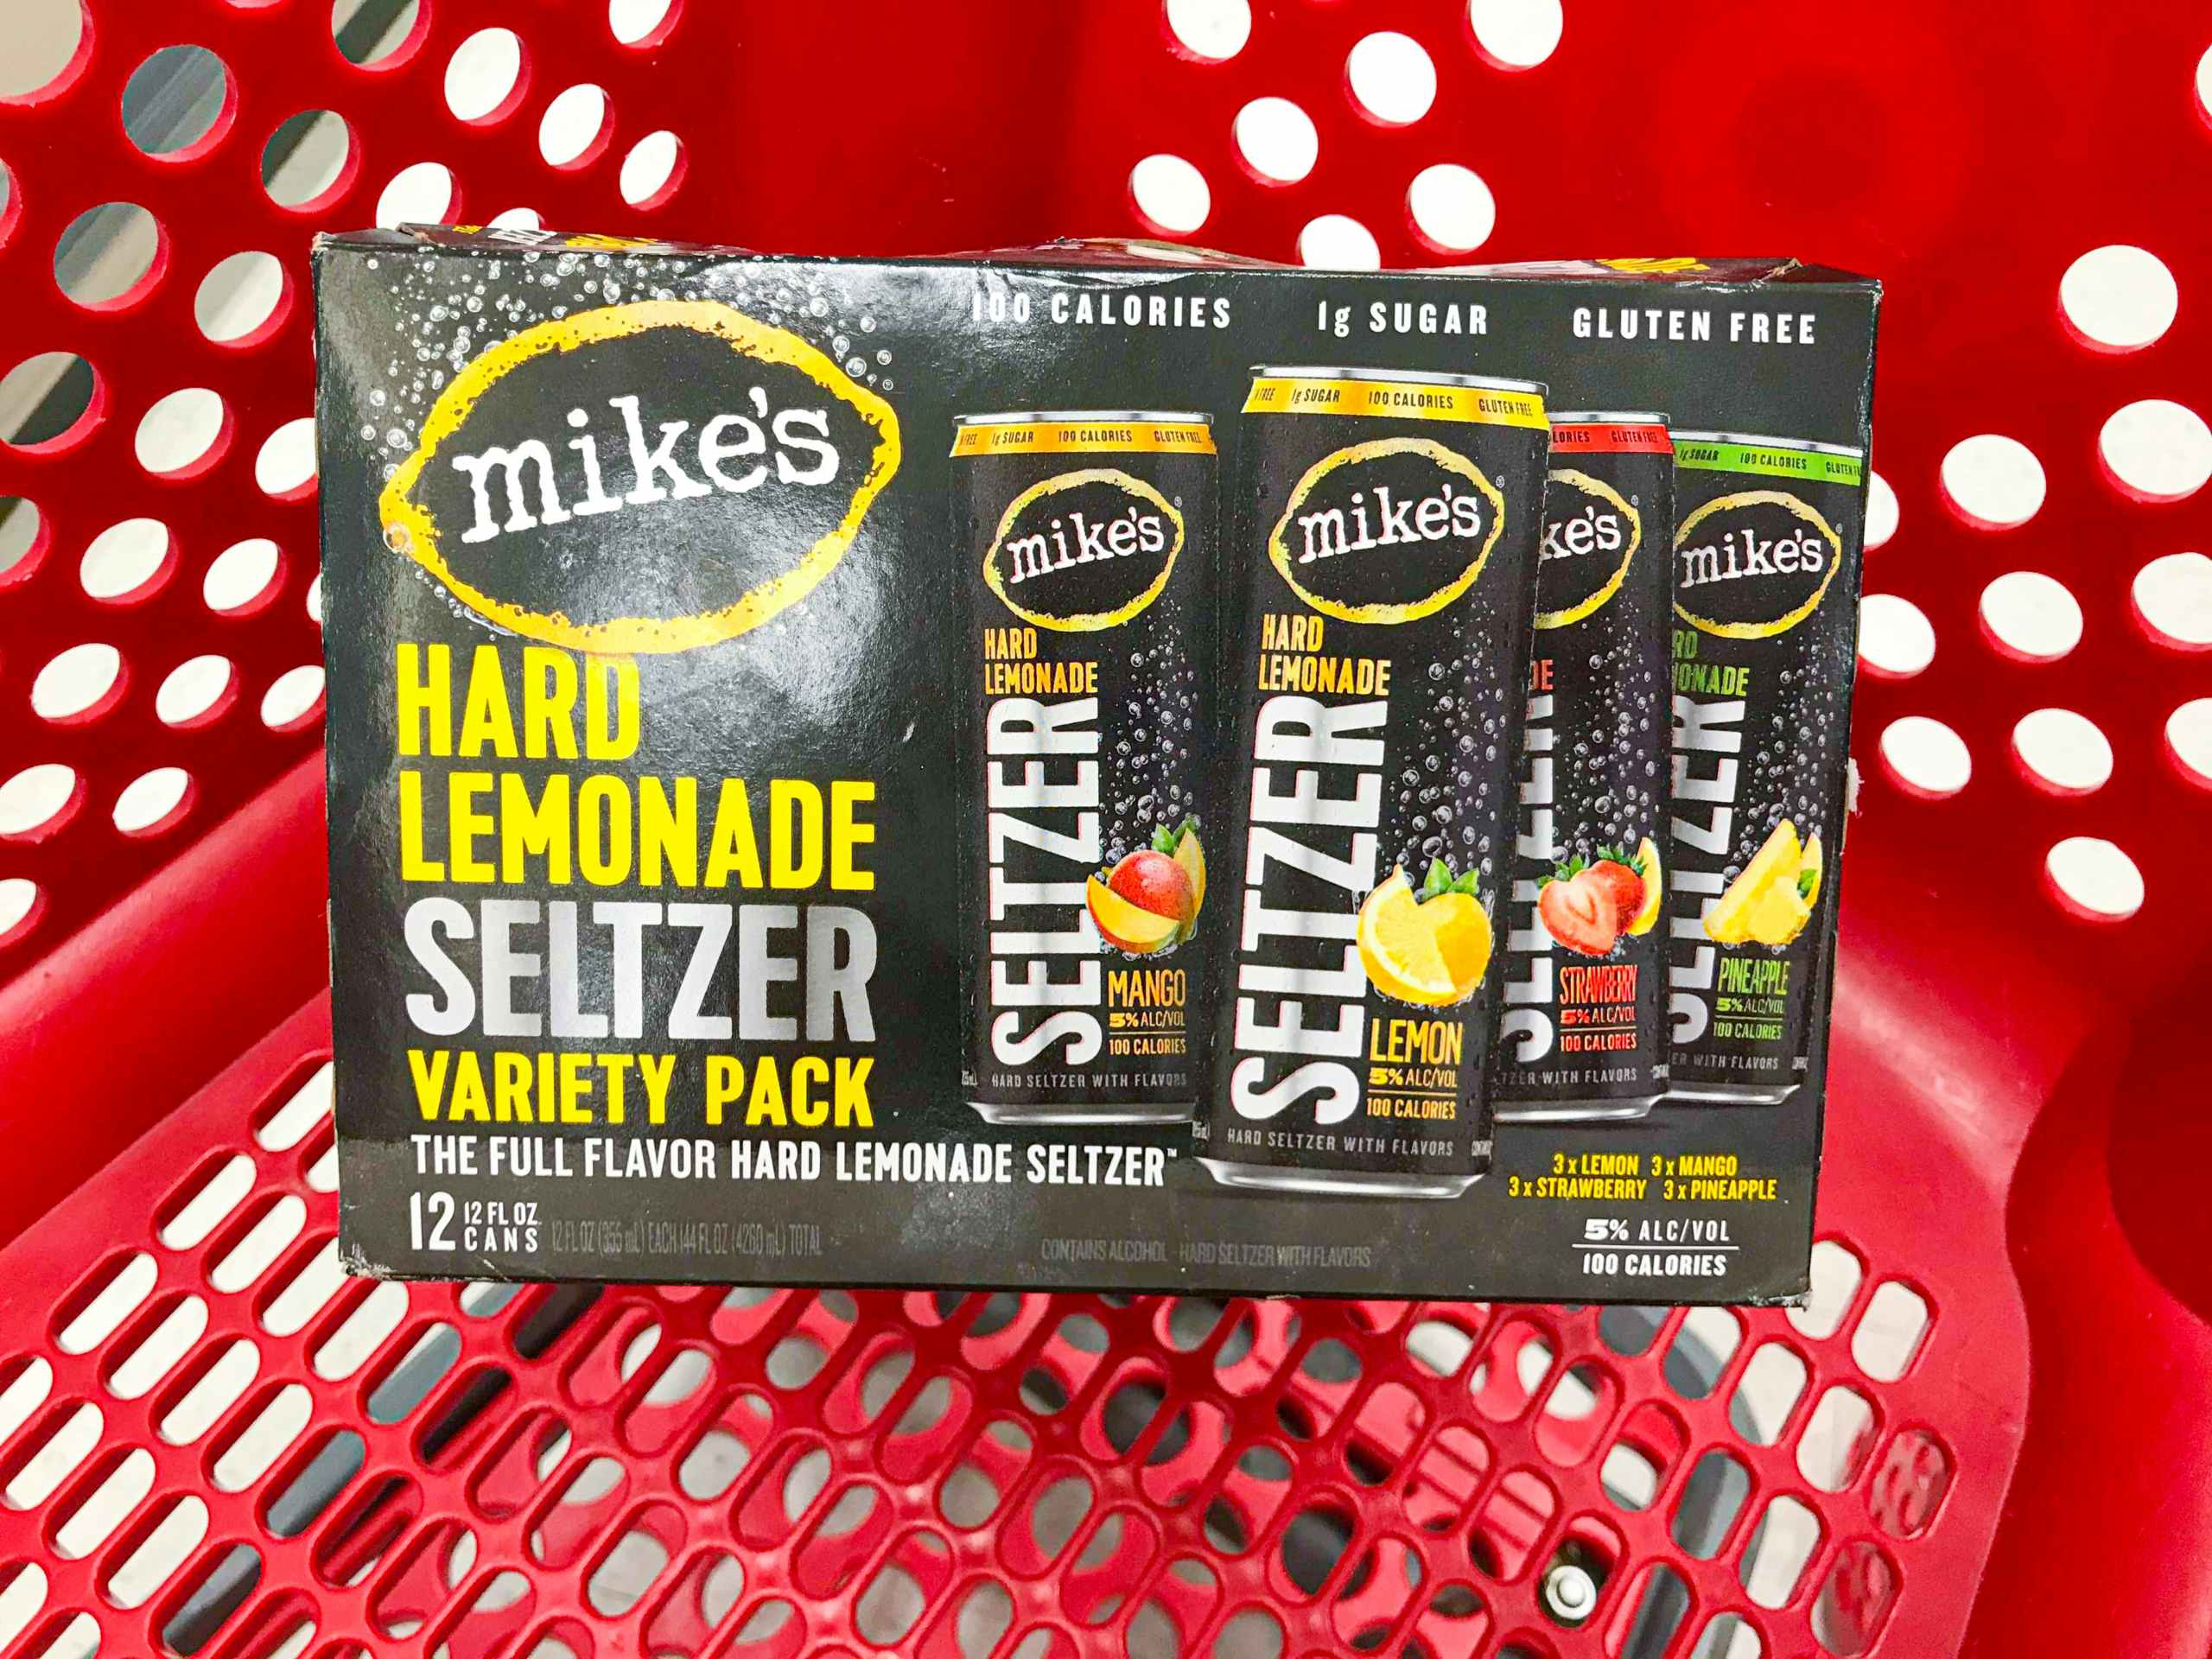 12-pack of Mikes Hard Lemonade seltzer in store shopping cart